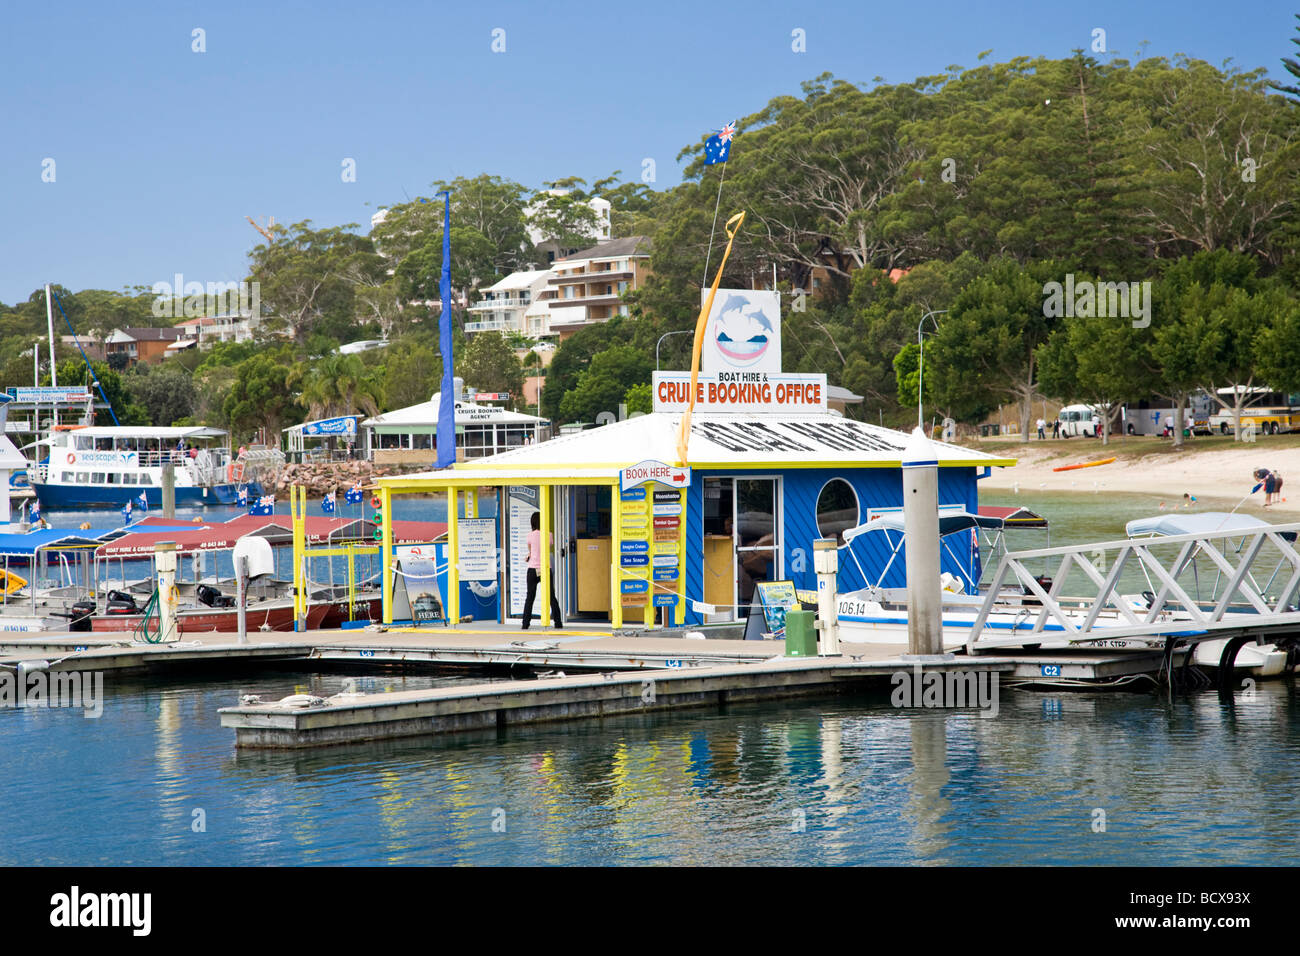 Cruise Booking Office Nelson Bay Port Stephens Australia Stock Photo